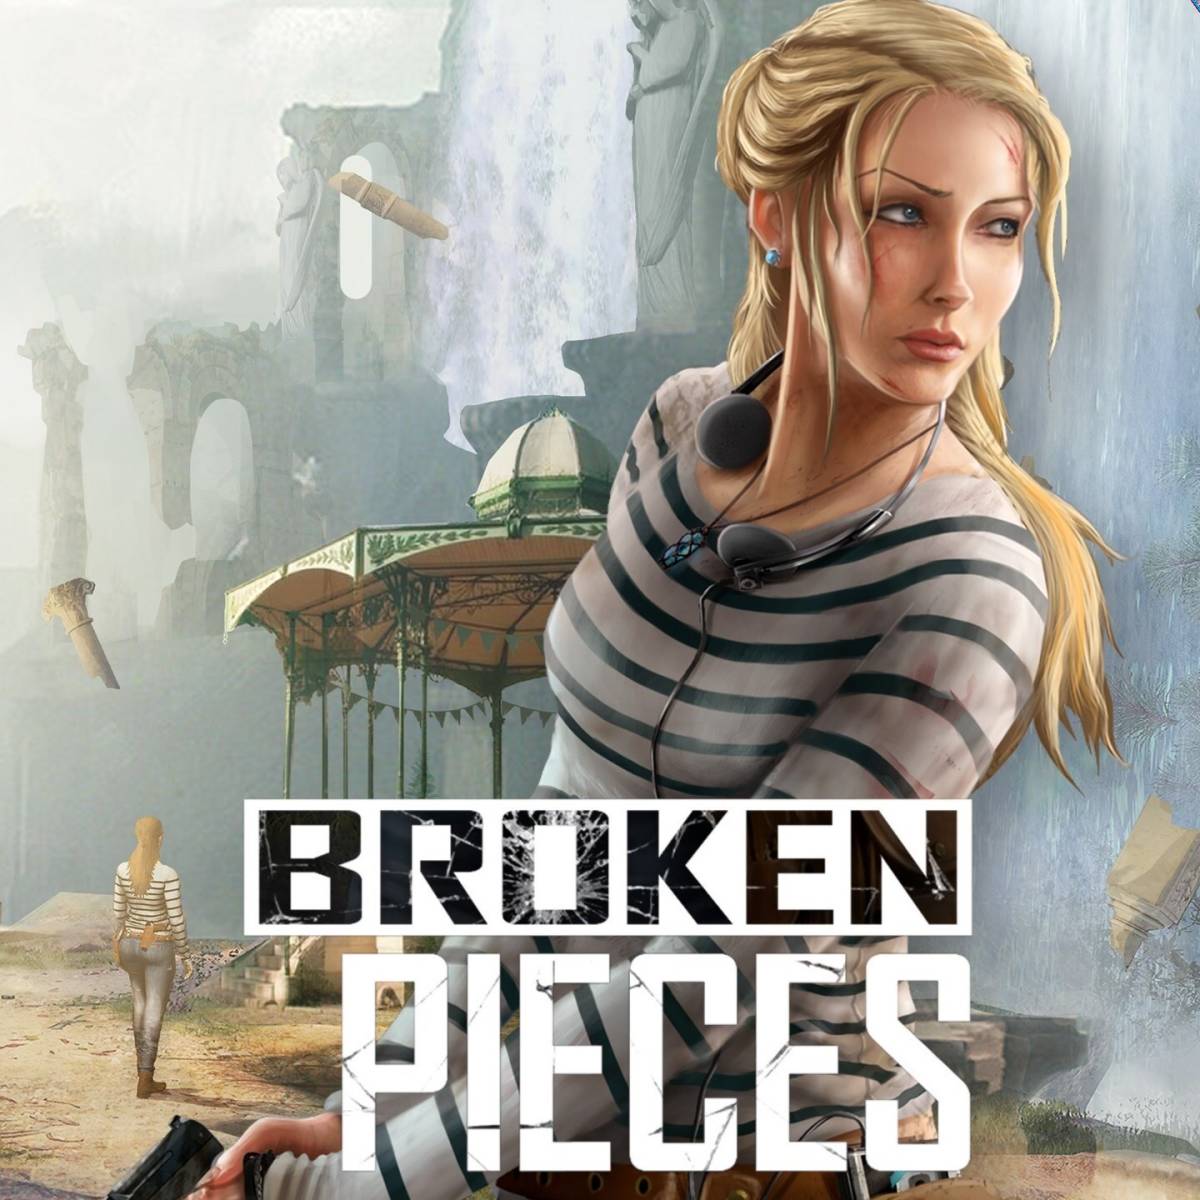 Broken Pieces / blow kn*pi- She's * приключения * PC игра Steam код Steam ключ 